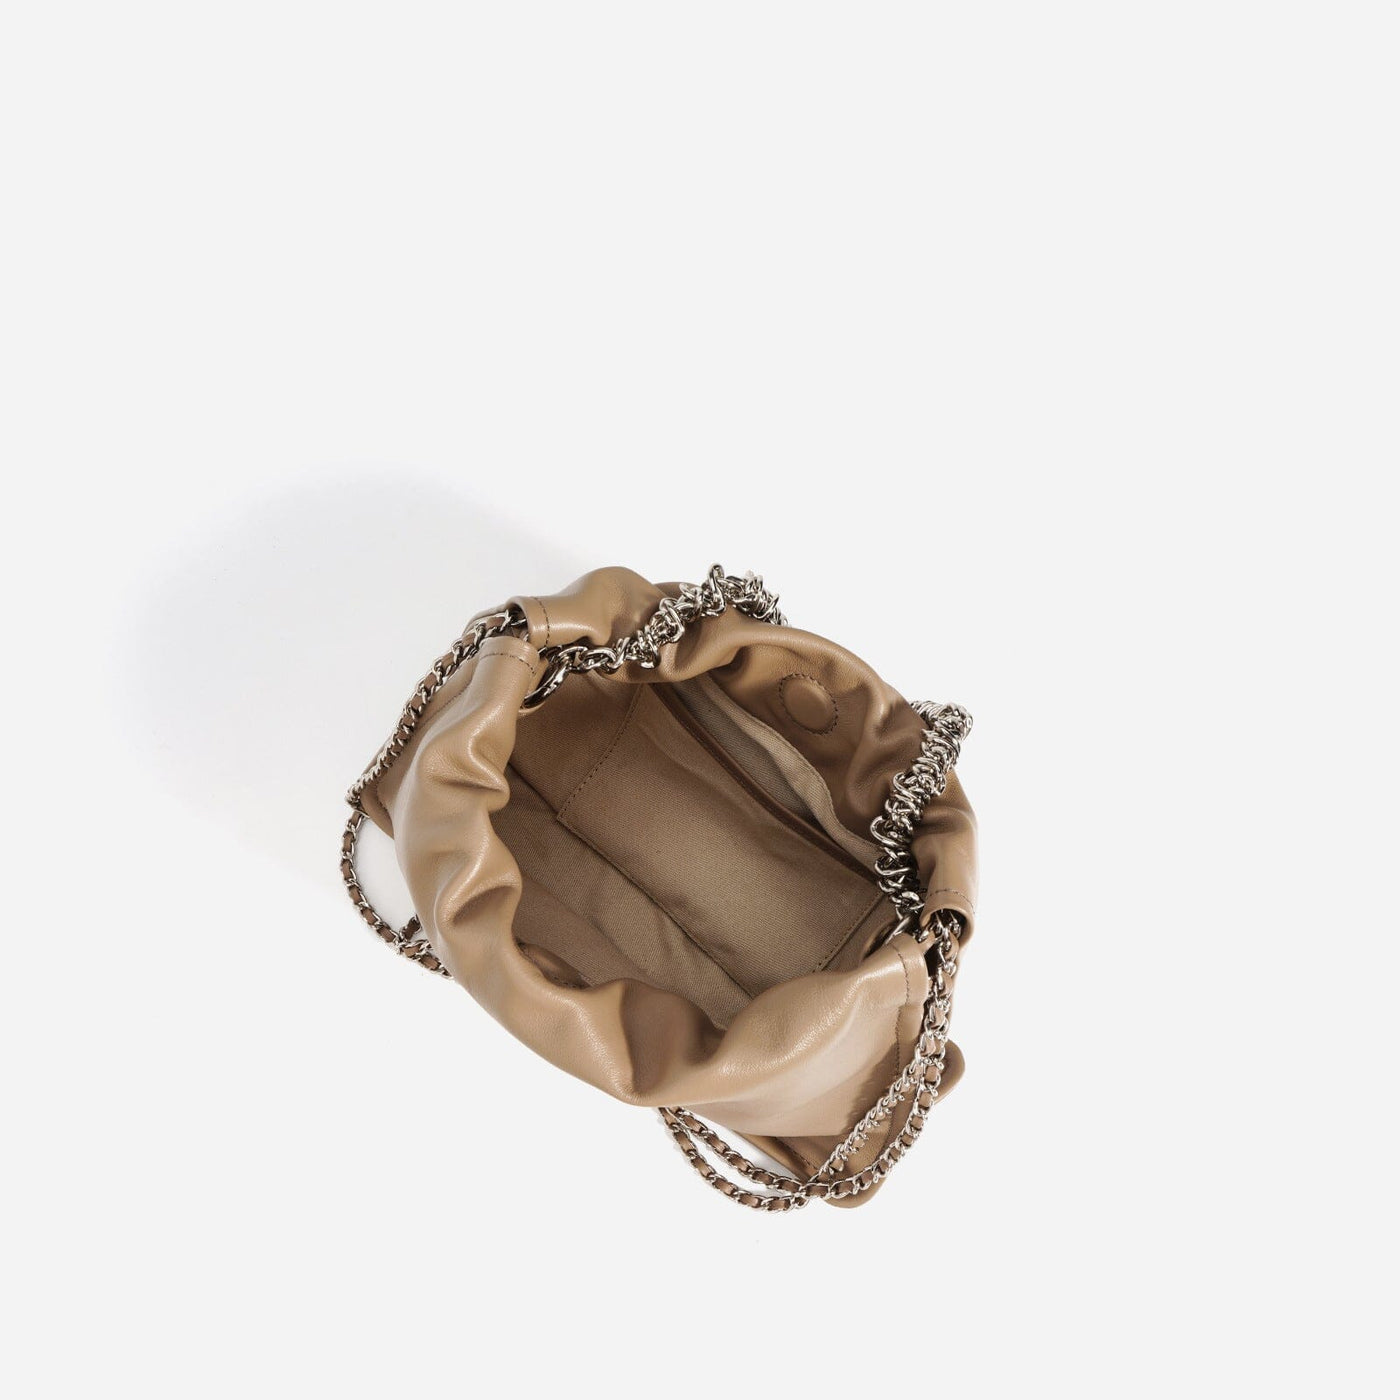 Stylish Soft Leather Casual Shoulder Bag